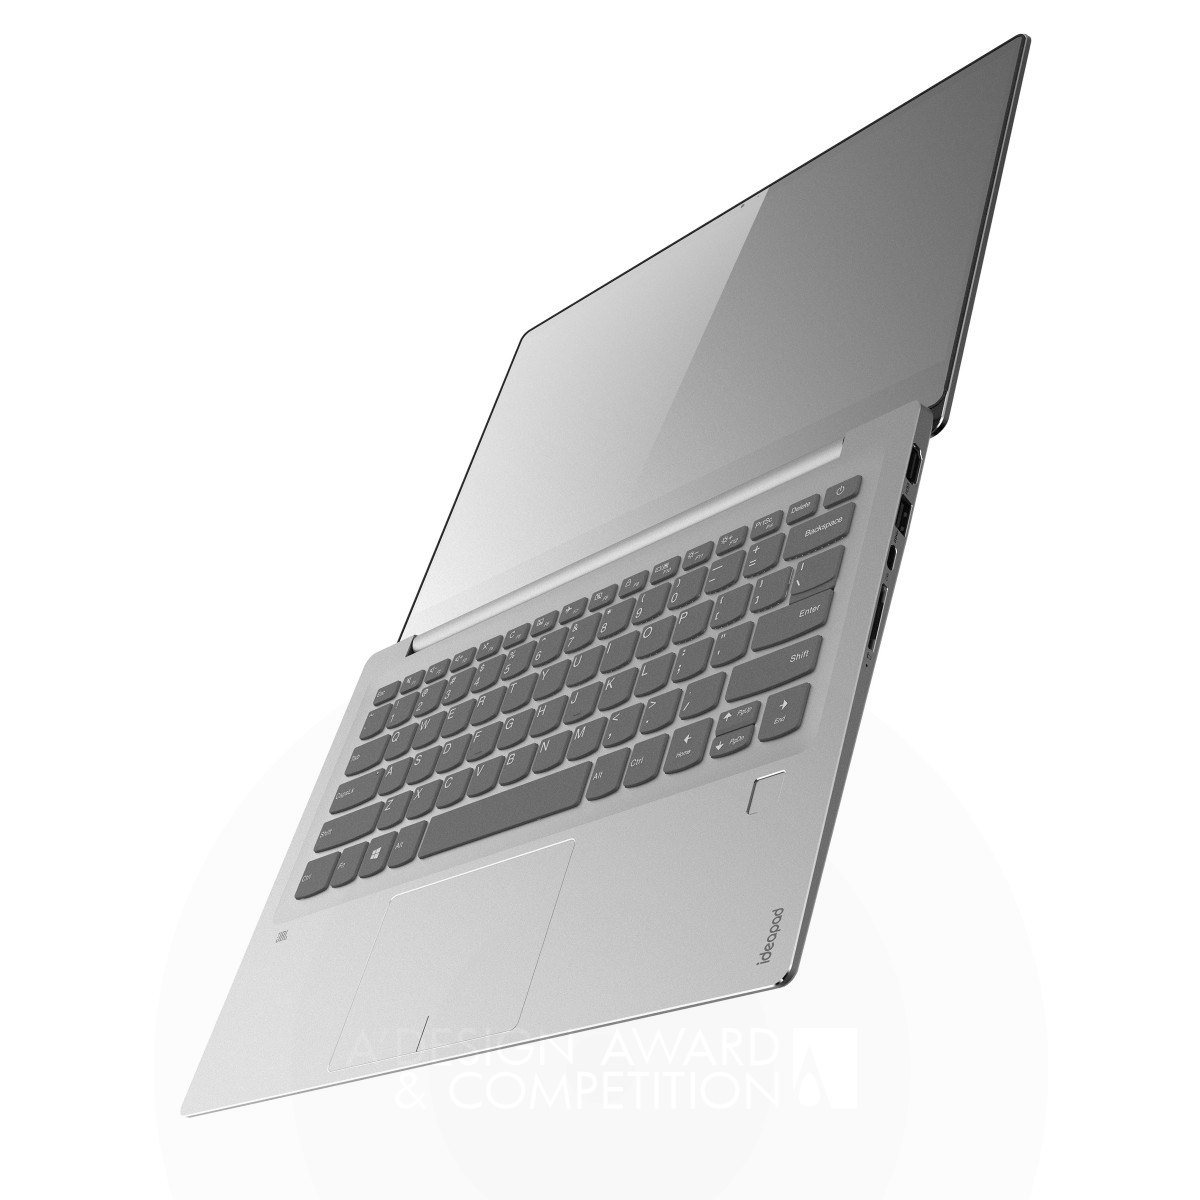 Lenovo Design Group laptop computers